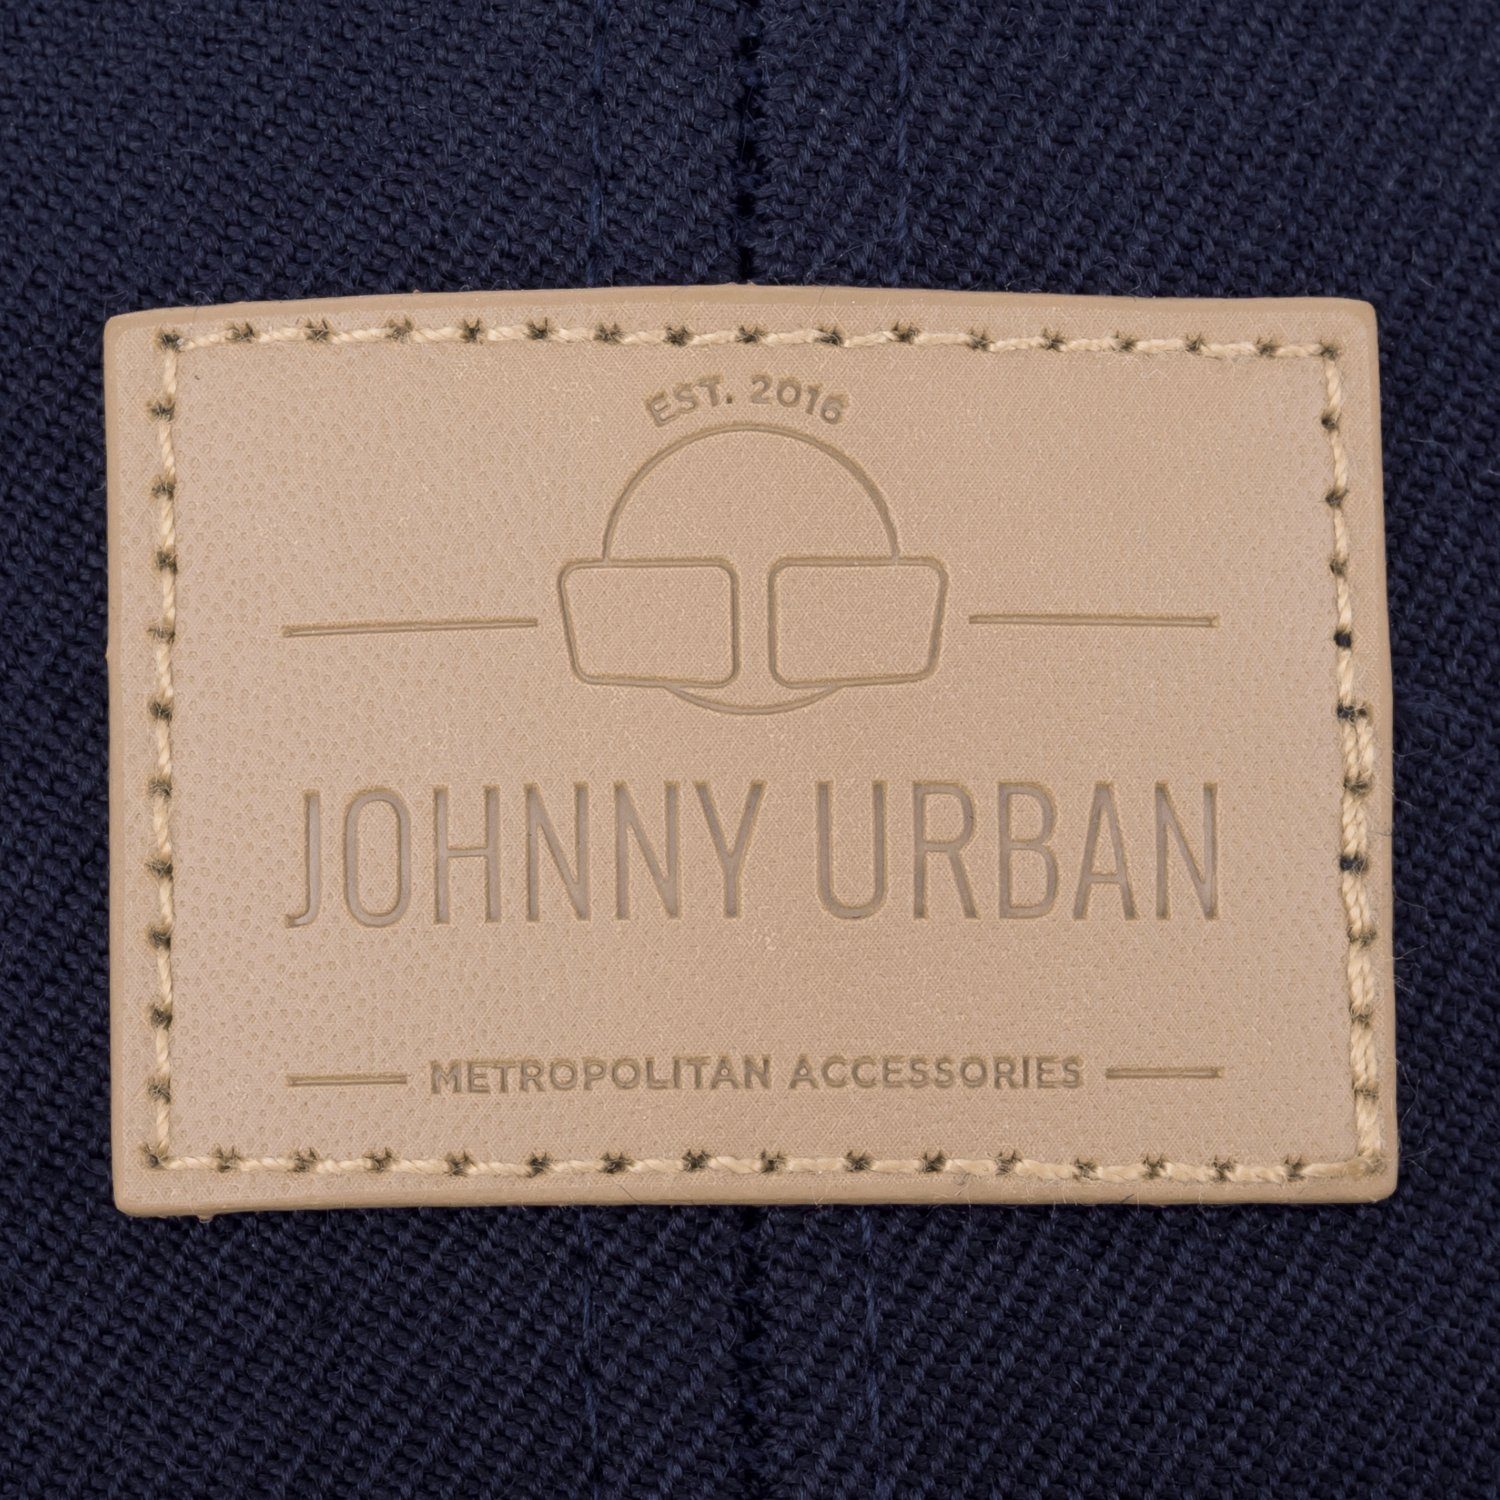 Johnny Urban Snapback Herren Damen blau DEAN Größenverstellbar, Unisex Teenager Cap Basecap FLAT Cap